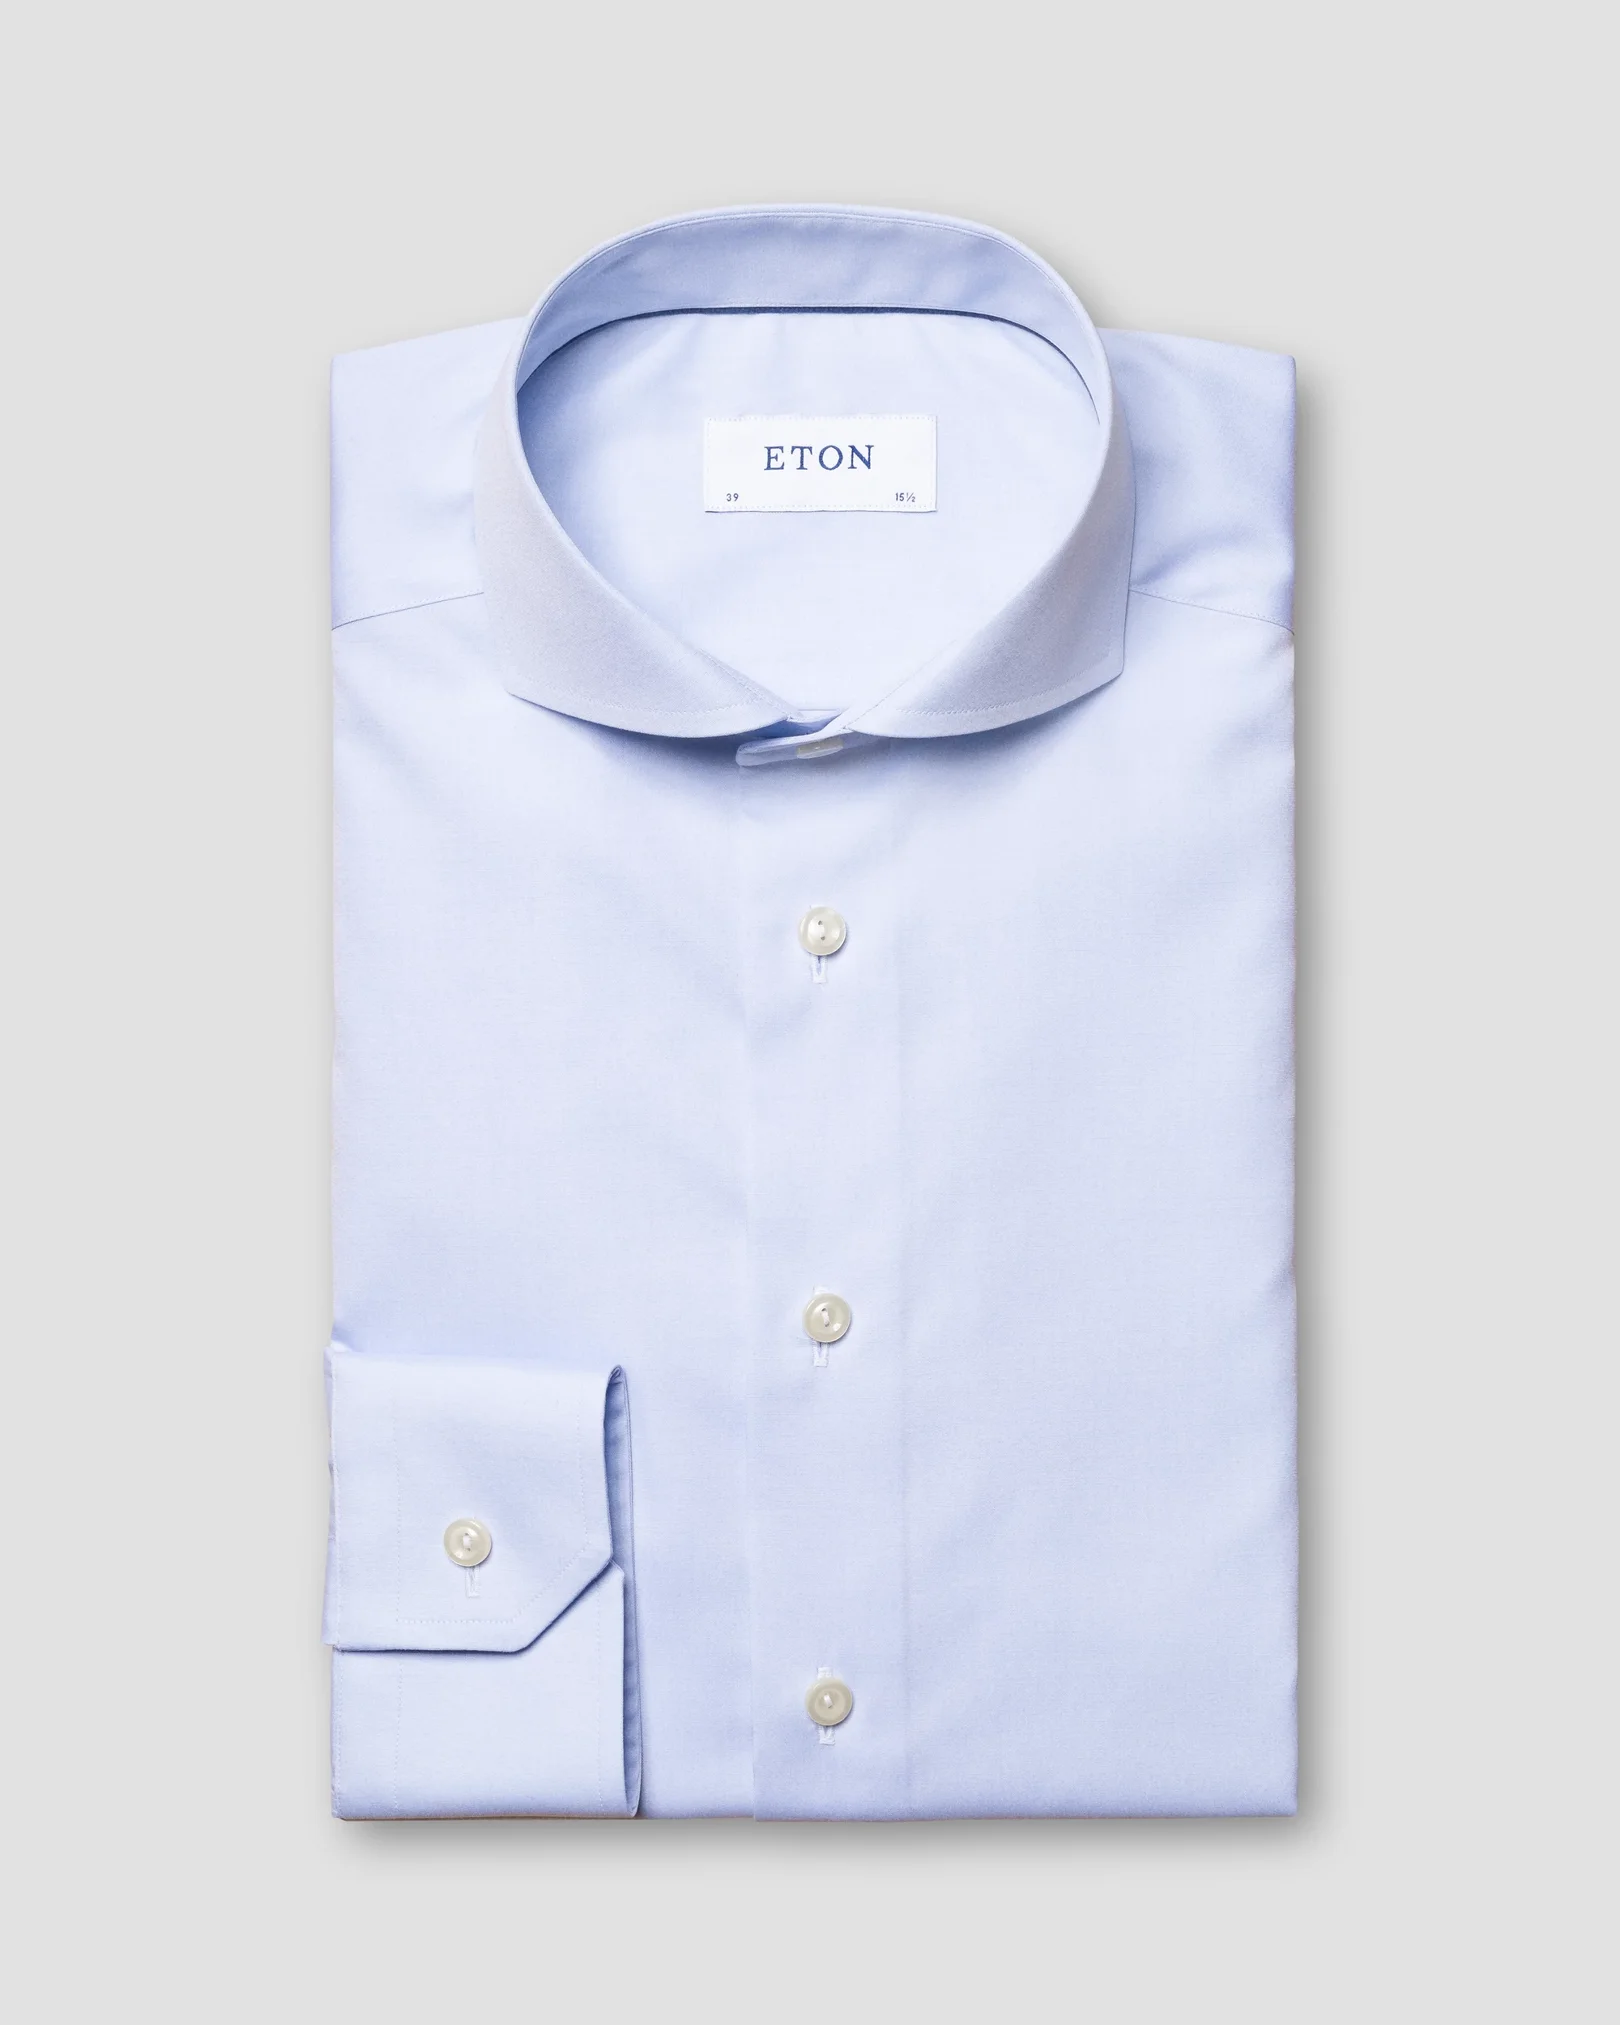 Eton - light blue poplin shirt extreme cut away